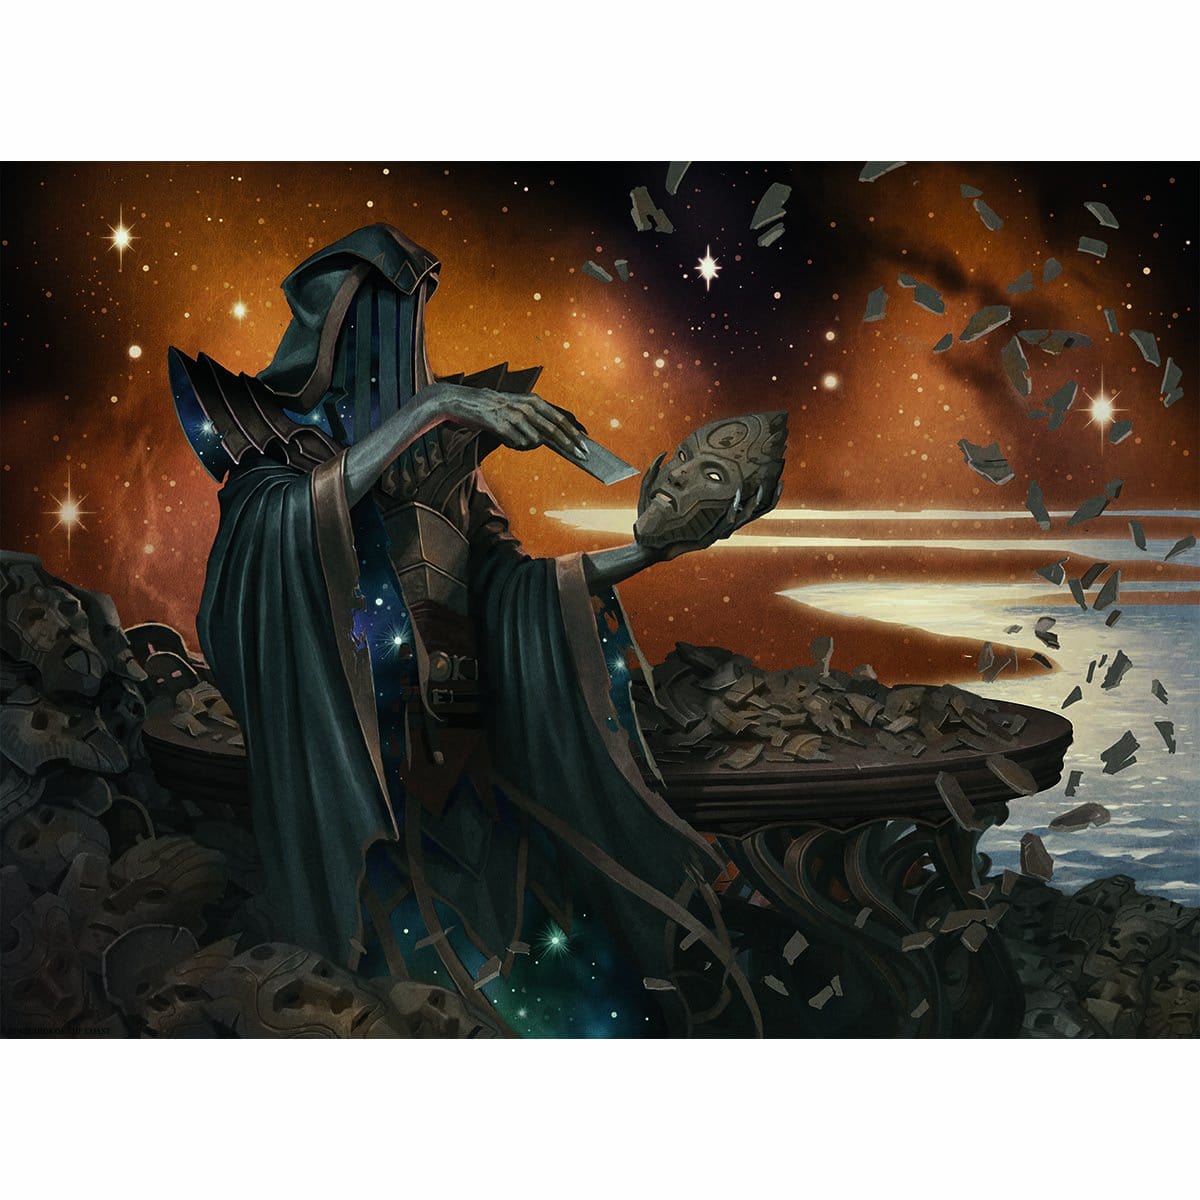 Magic the Gathering Adventures: Underworld Dreams is a Masterpiece